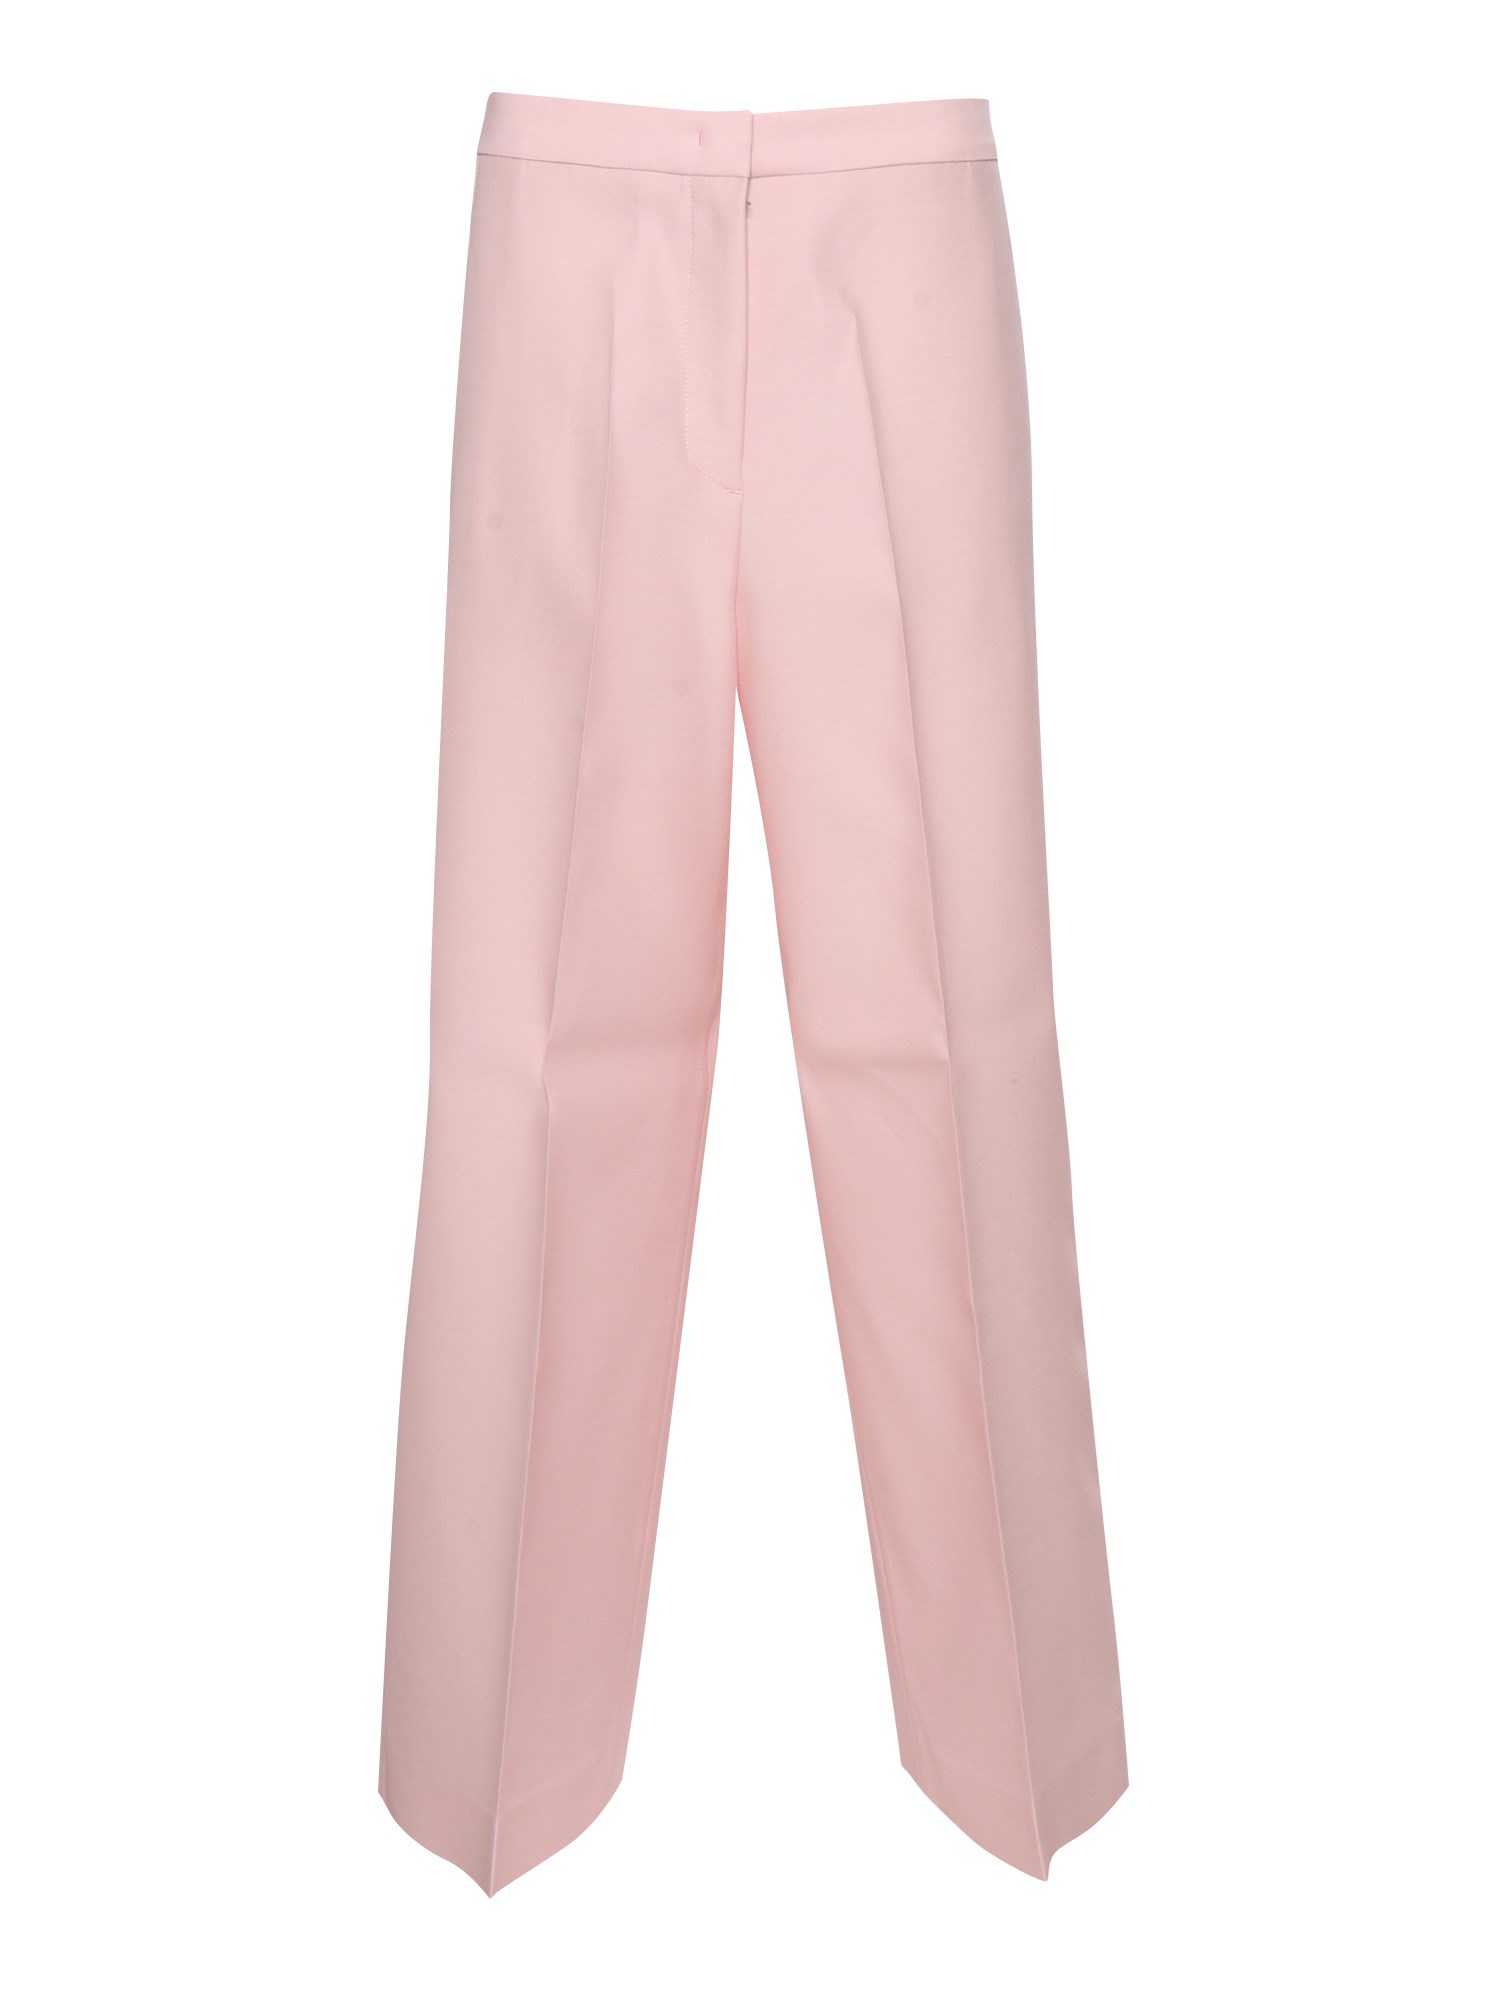 Fabiana Filippi Pink Trousers